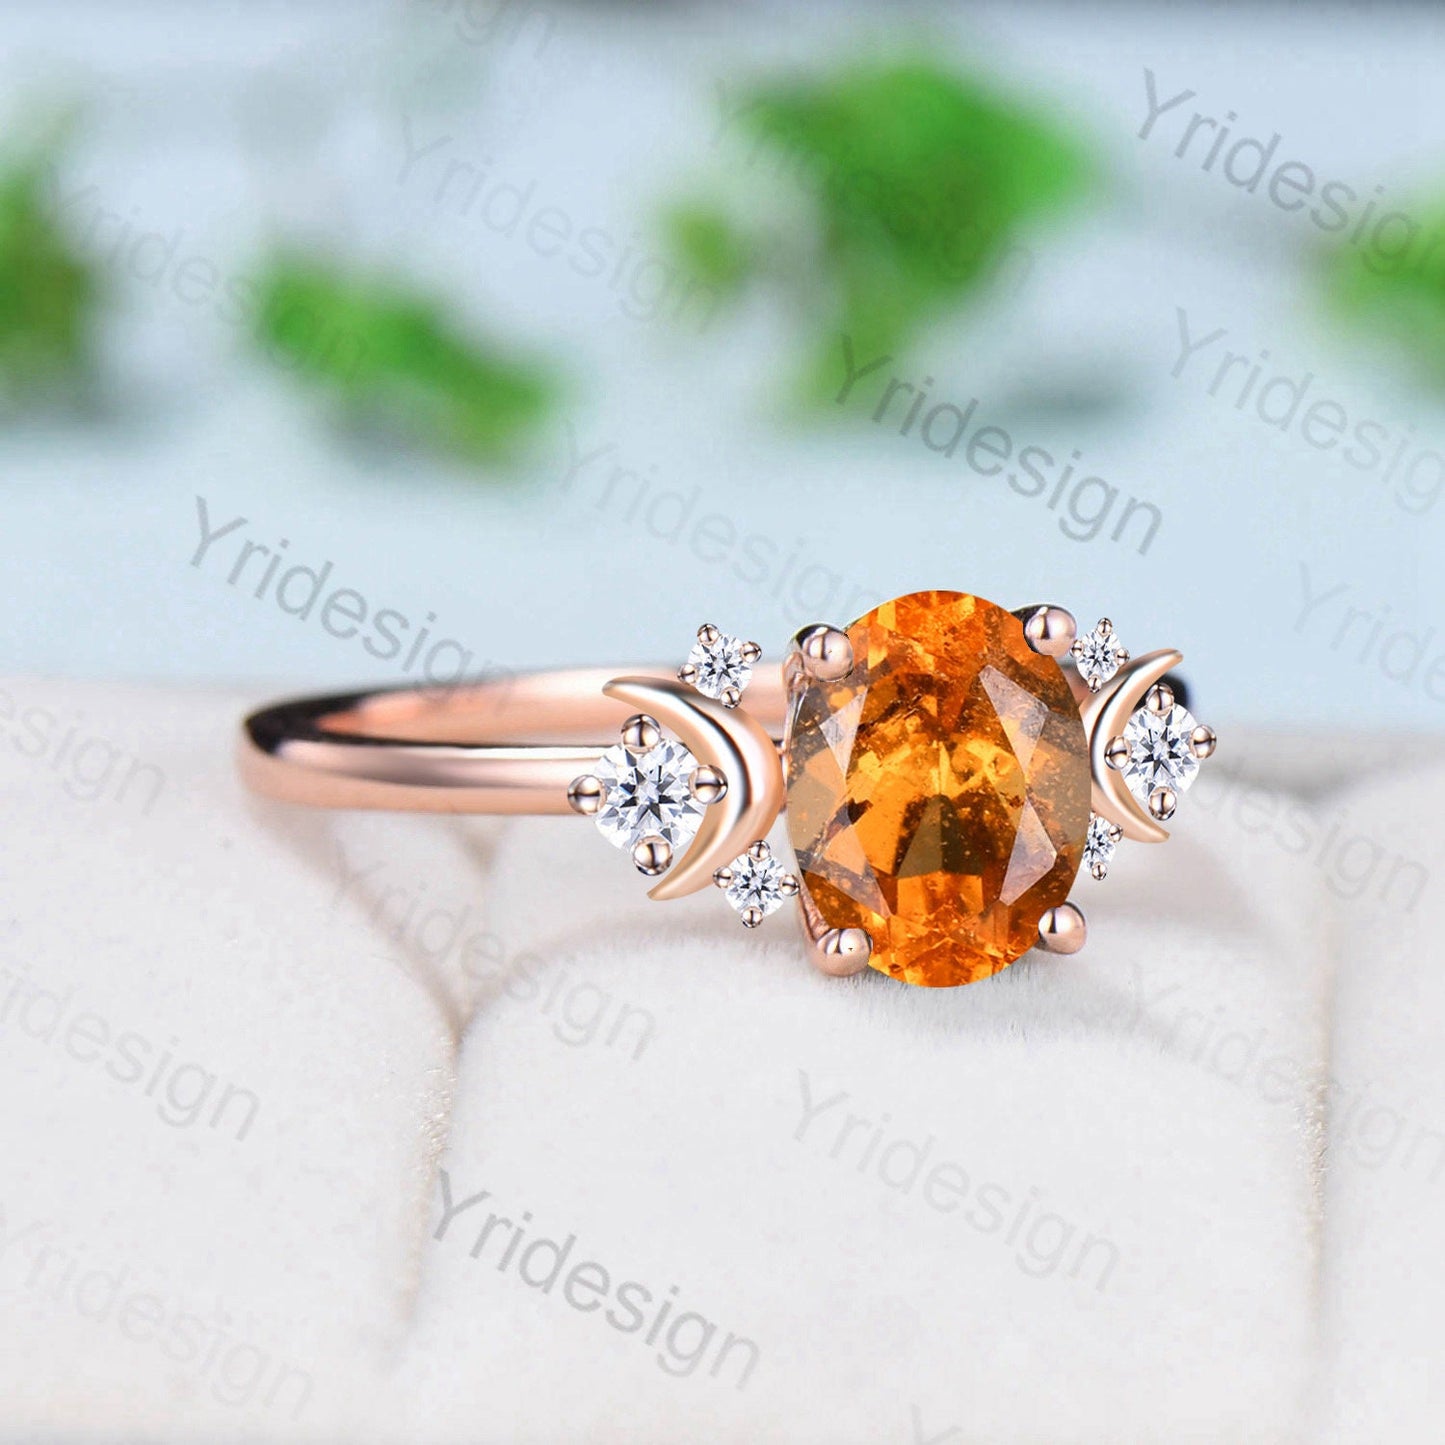 Vintage Natural Spessartite Garnet Engagement Ring Unique Celestial Moon Fanta Crystal Ring Rose Gold Art Deco Personalized Gift for Her - PENFINE